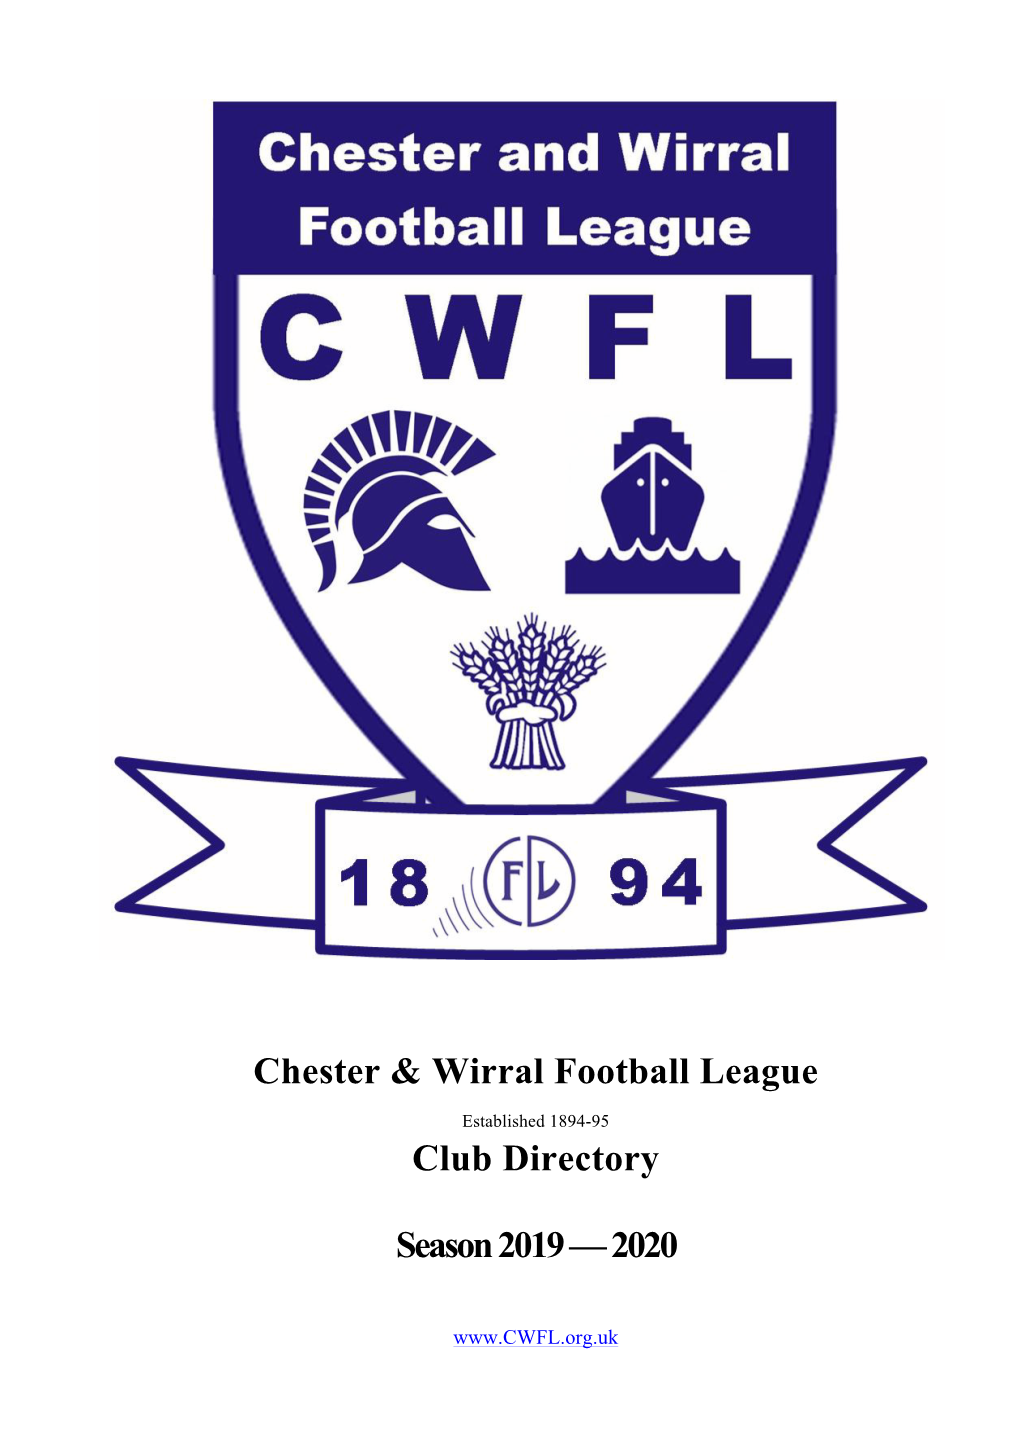 Chester & Wirral Football League Club Directory Season 2019 — 2020